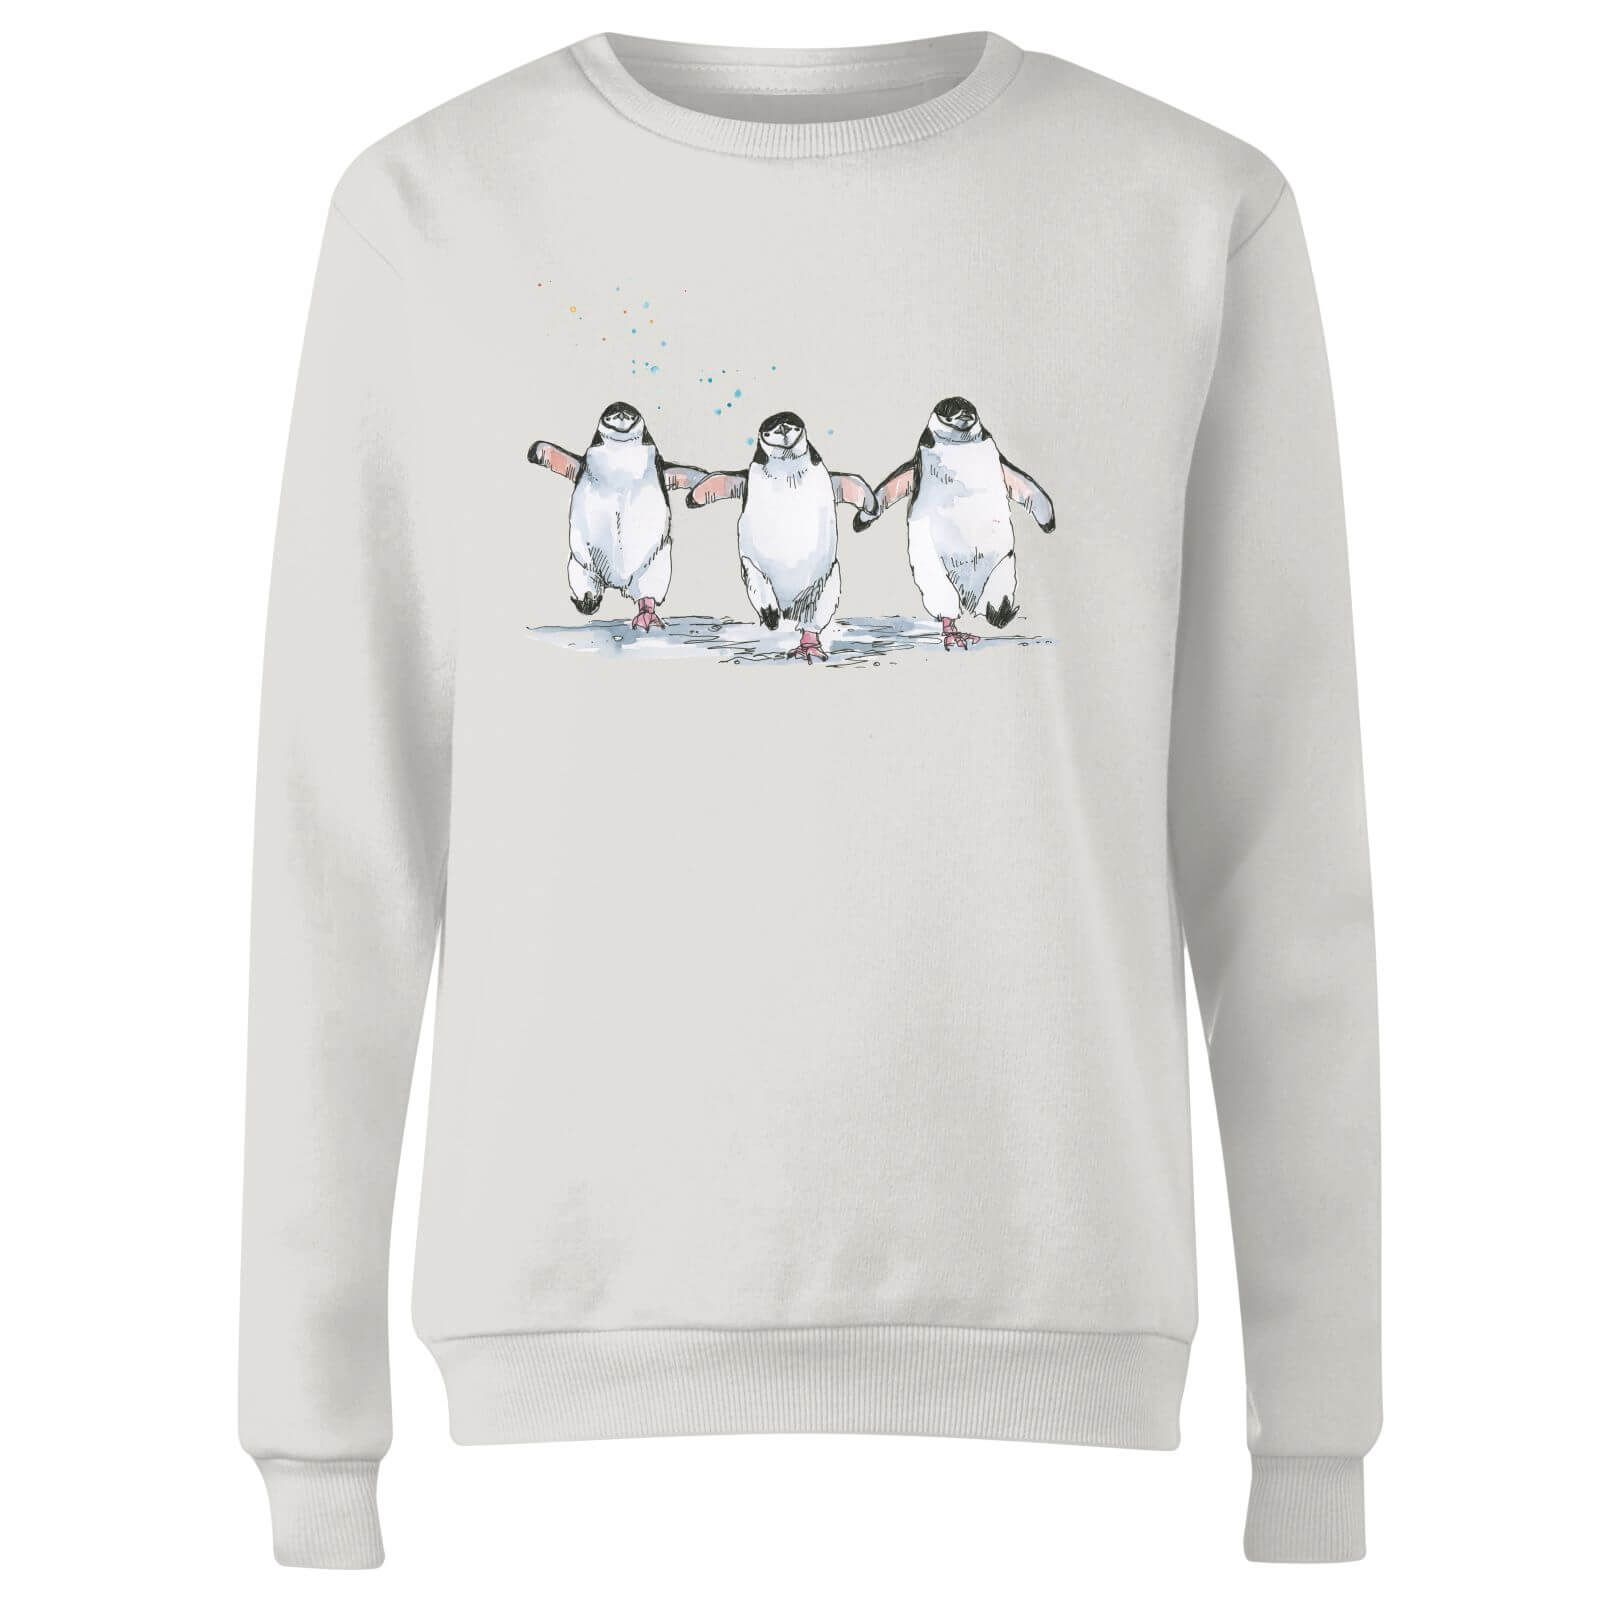 Snowtap Penguins Women's Sweatshirt - White - XS - White